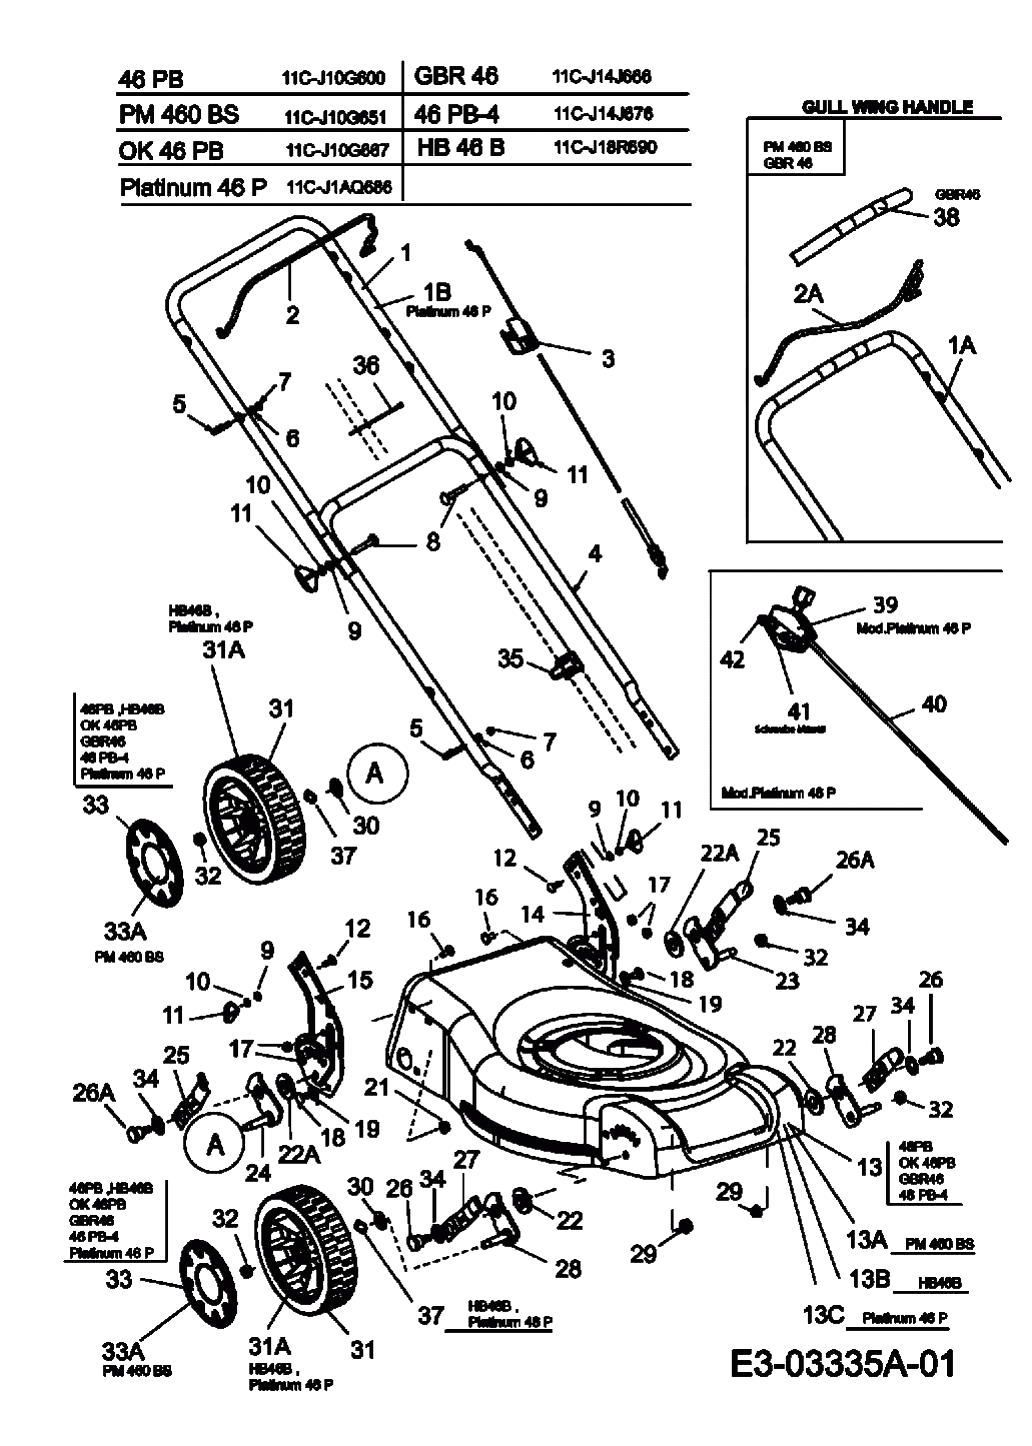 MTD Артикул 11C-J14J676 (год выпуска 2007). Ручка, колеса, регулятор высоты реза